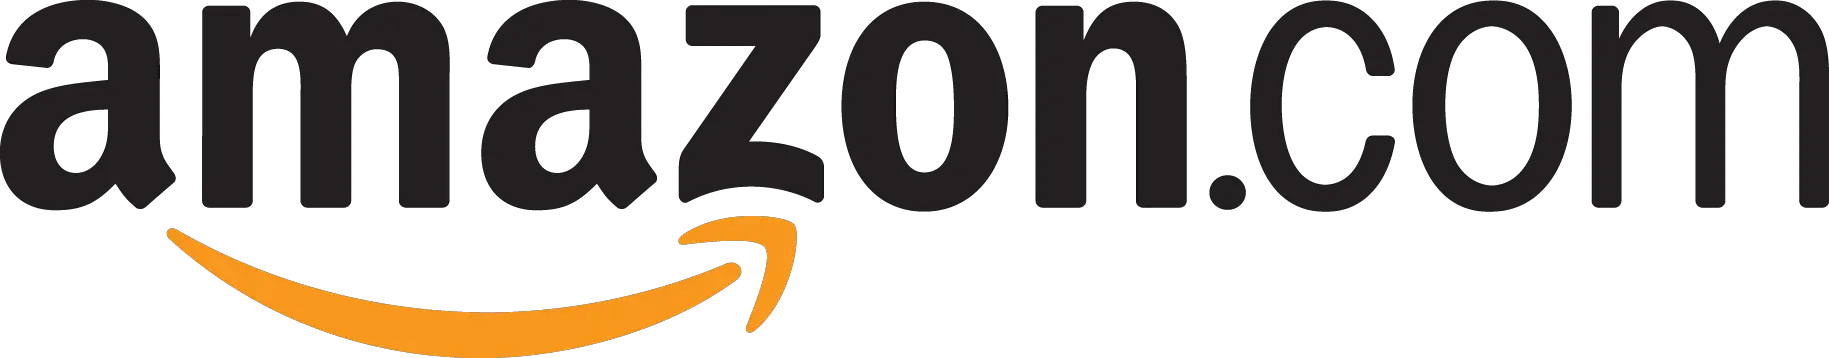 Amazon Com Vs Amazon Ca Guide To Online Cross Border Shopping For Canadians Cross Border Shopping